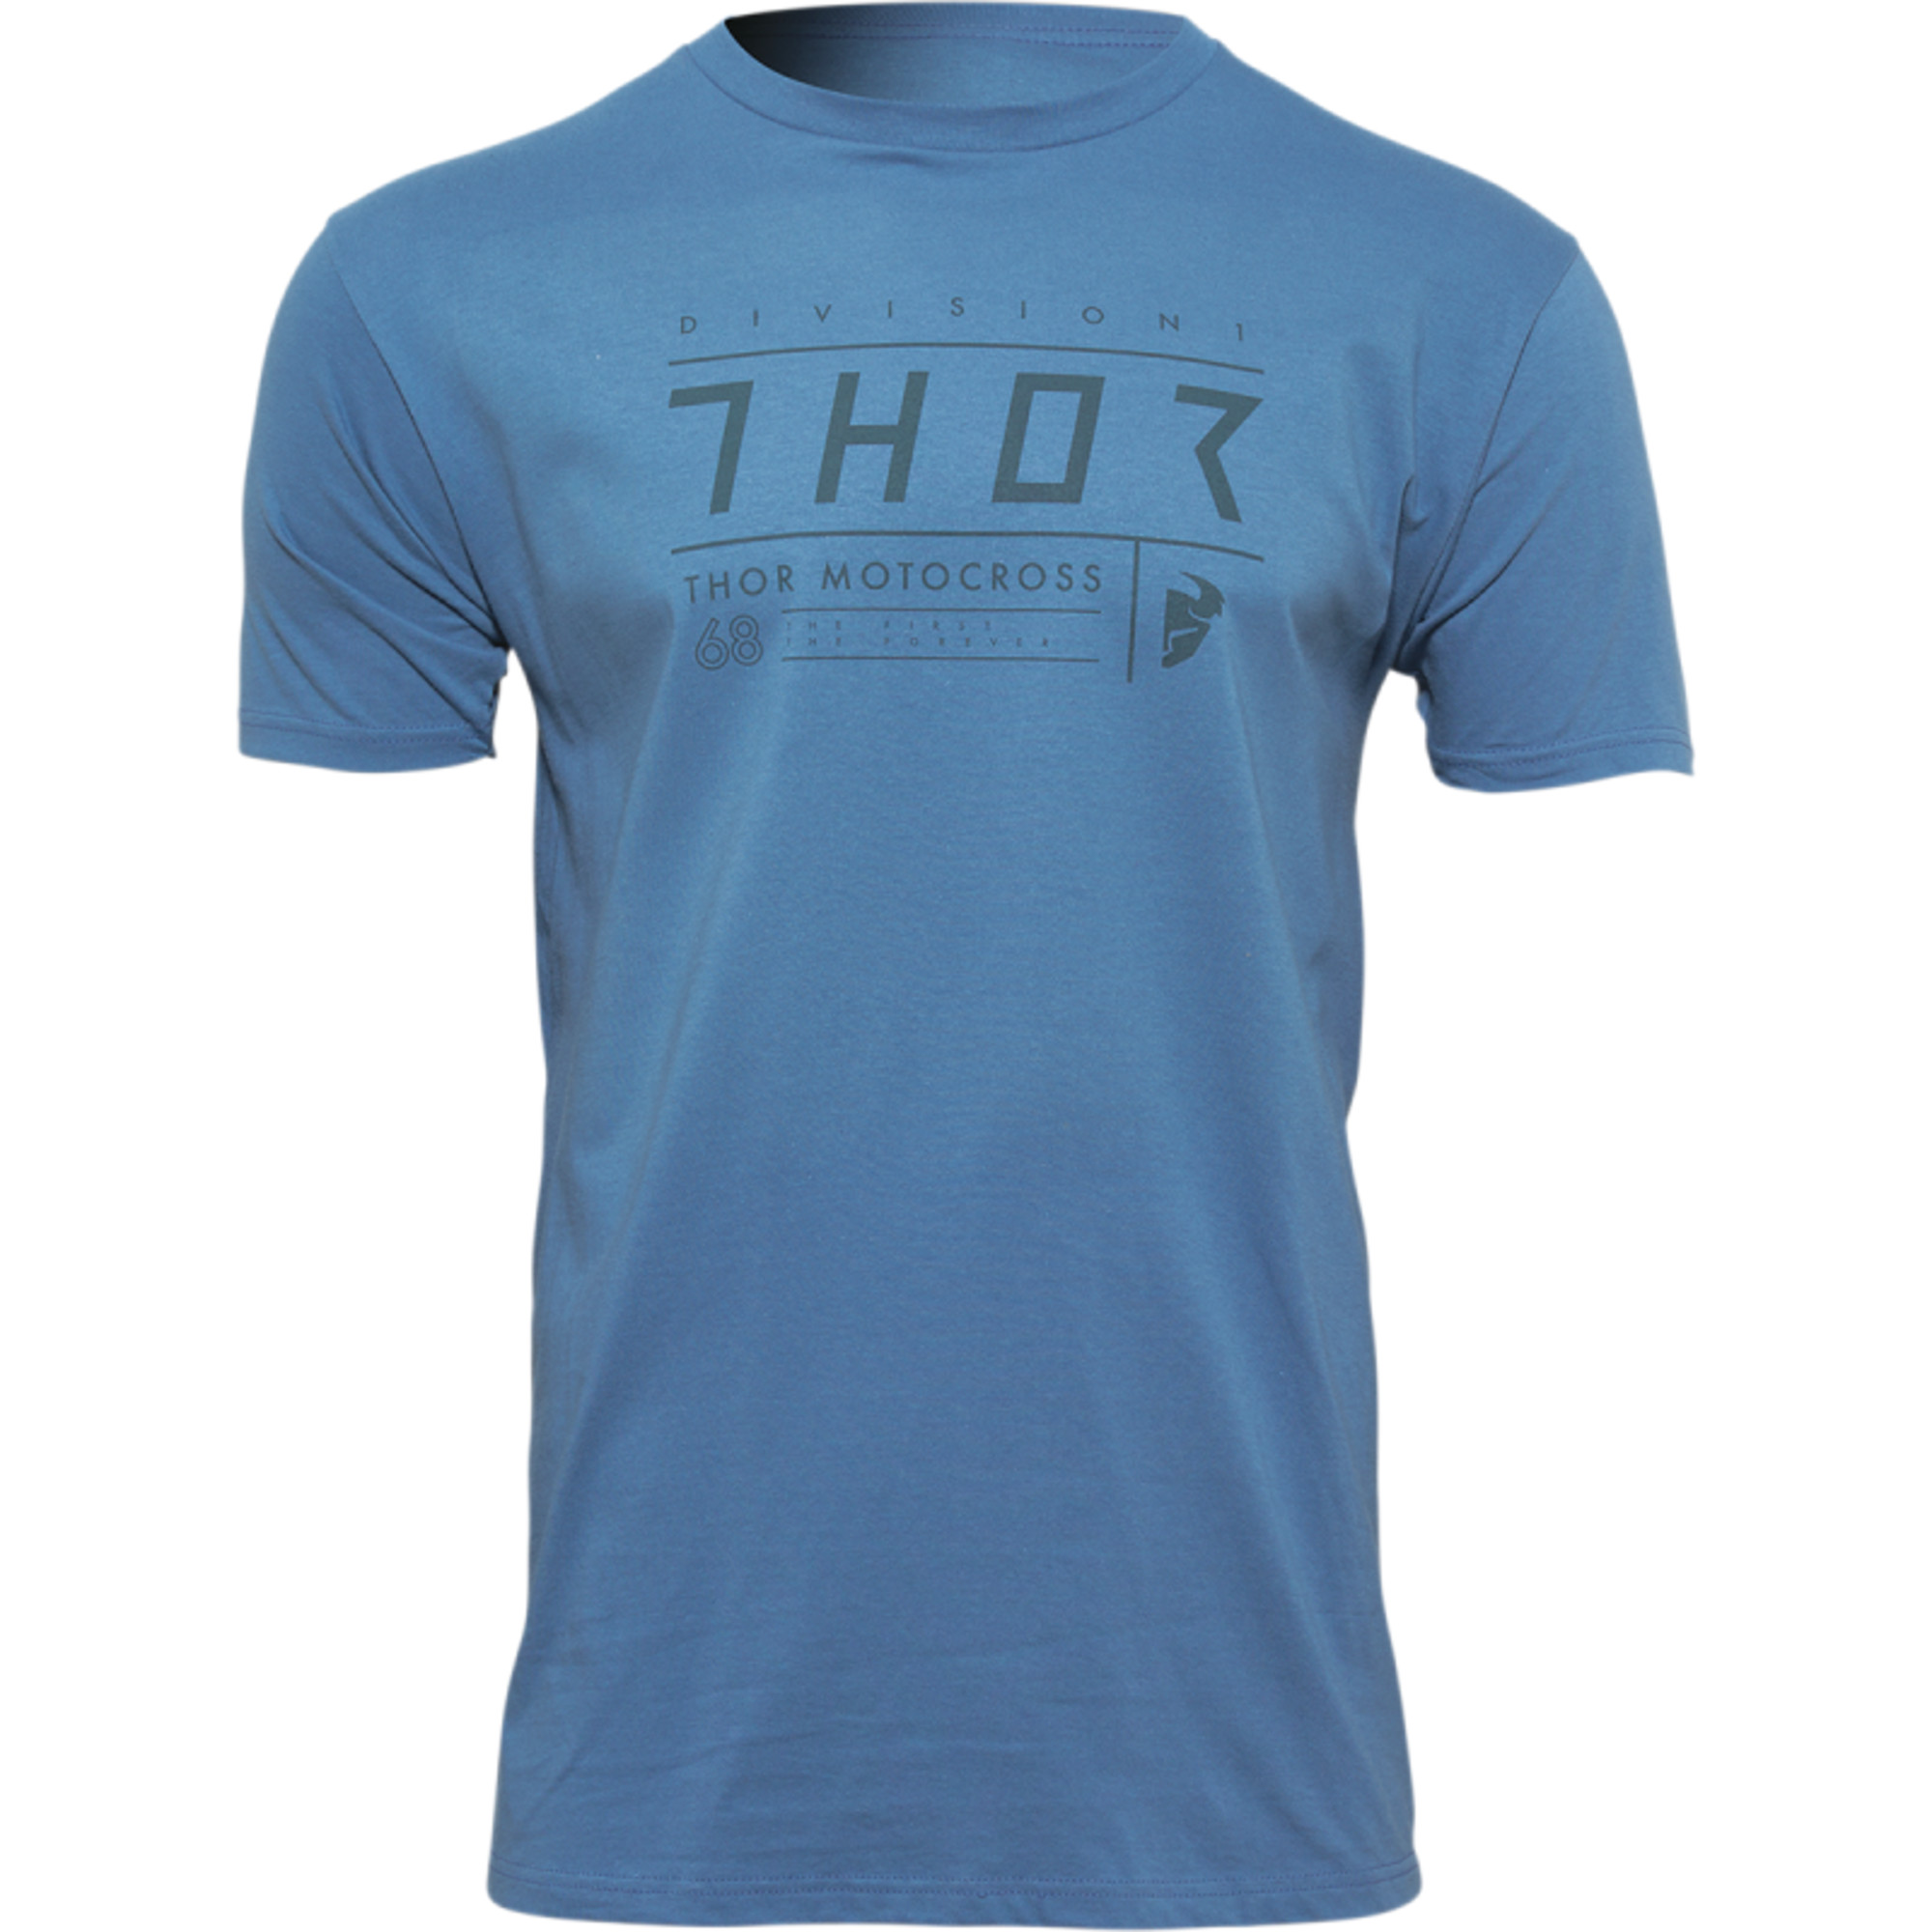 thor t-shirt shirts for men division